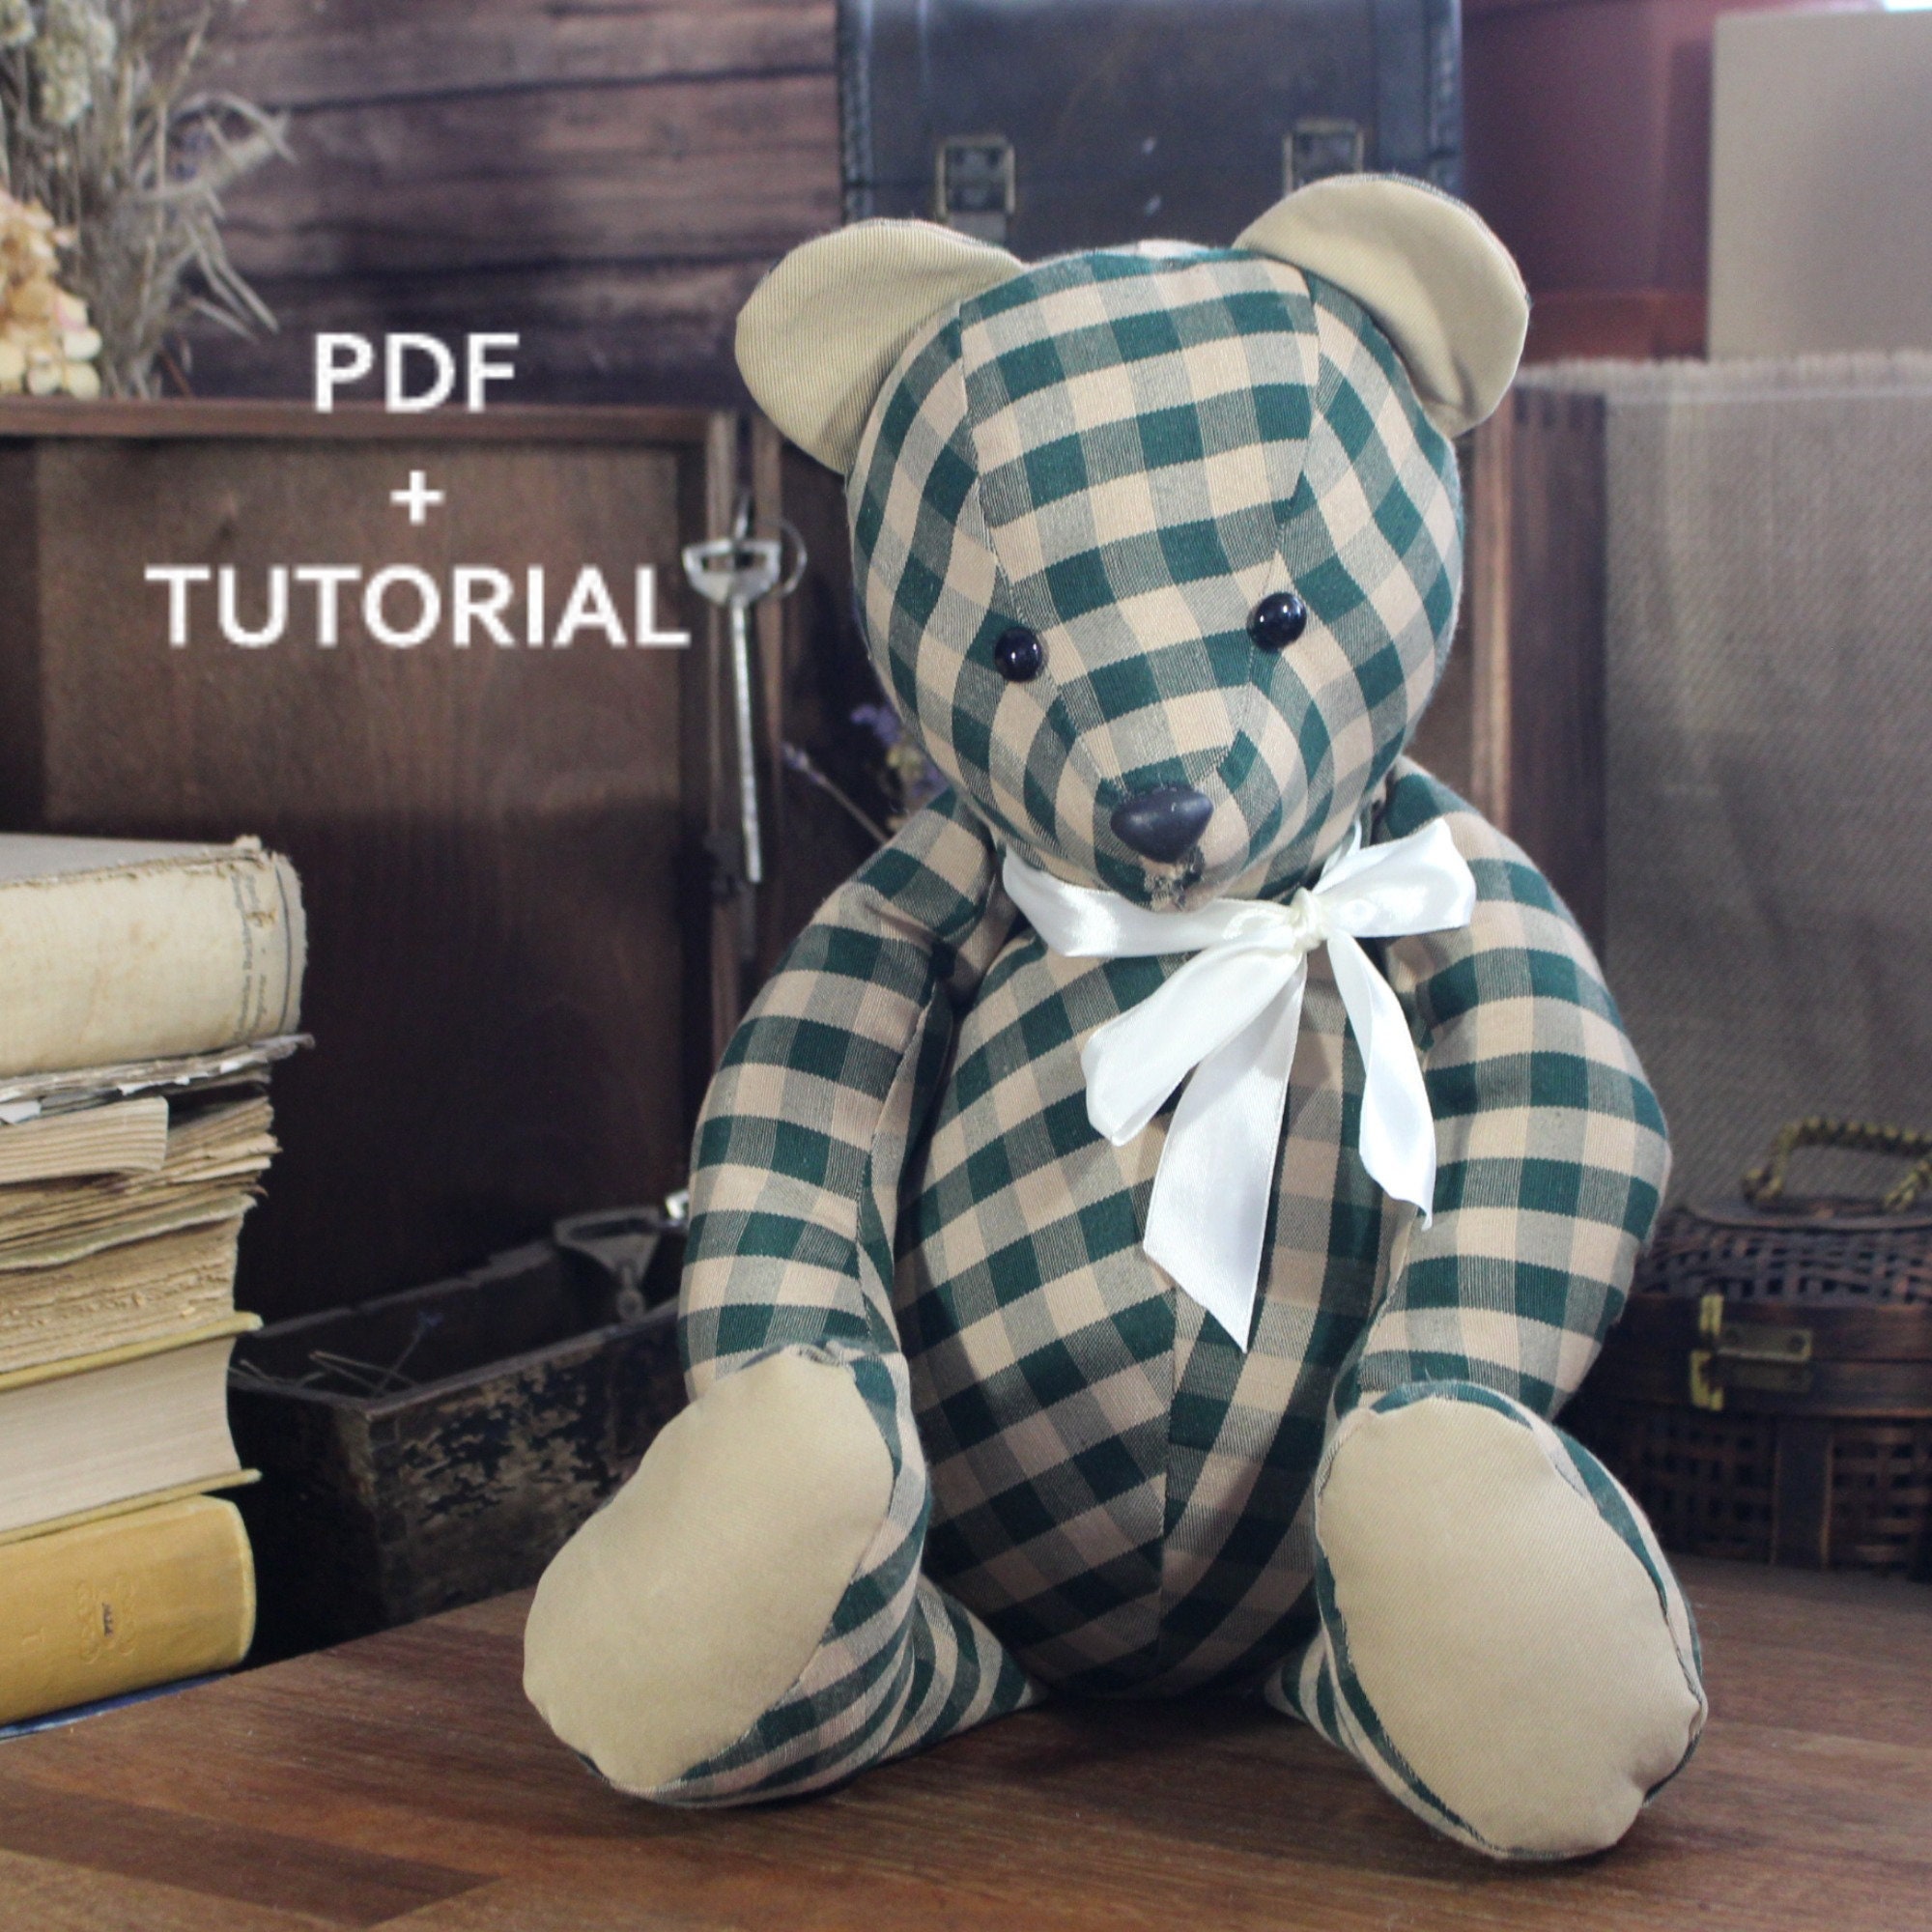 Memory Bear Easy 18 Sewing Pattern Simple Bear Pattern Sewing Pattern PDF Teddy  Bear Pattern Keepsake Bear Sew Bear Vintage Bear for Sewing 